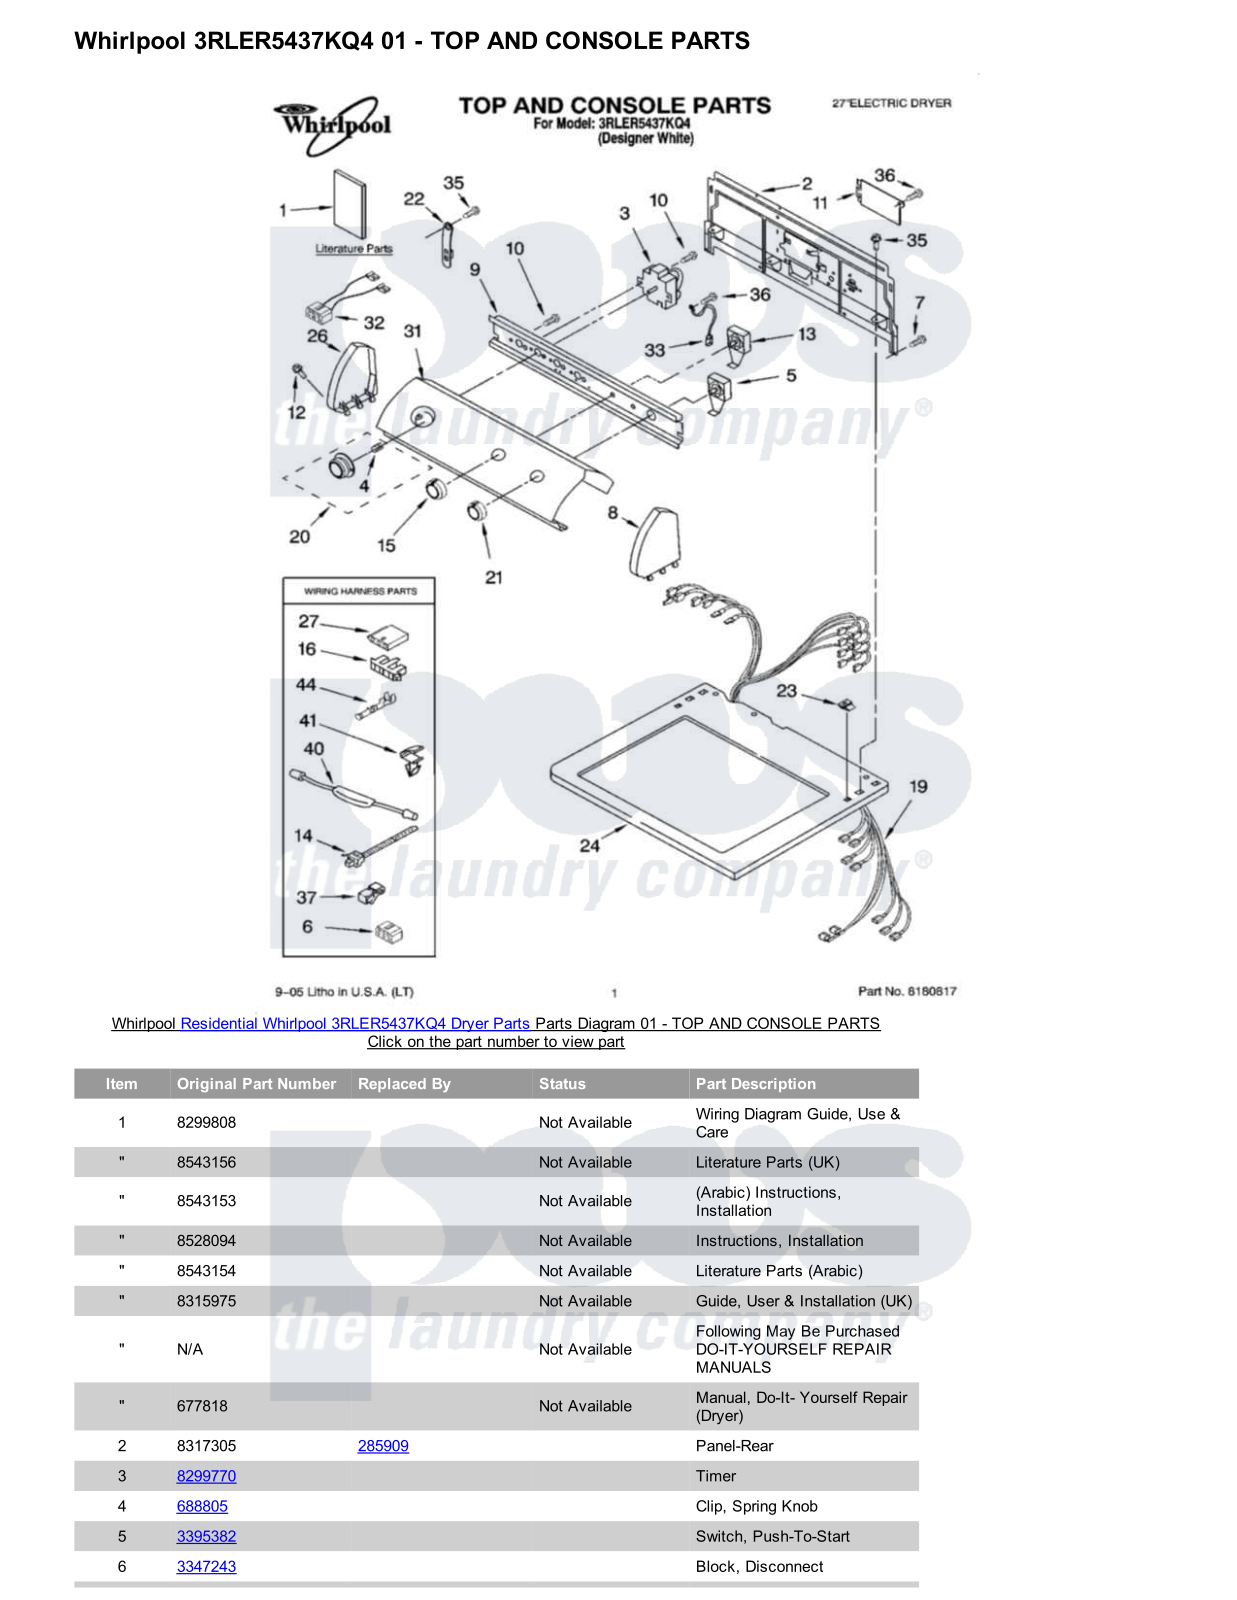 Whirlpool 3RLER5437KQ4 Parts Diagram